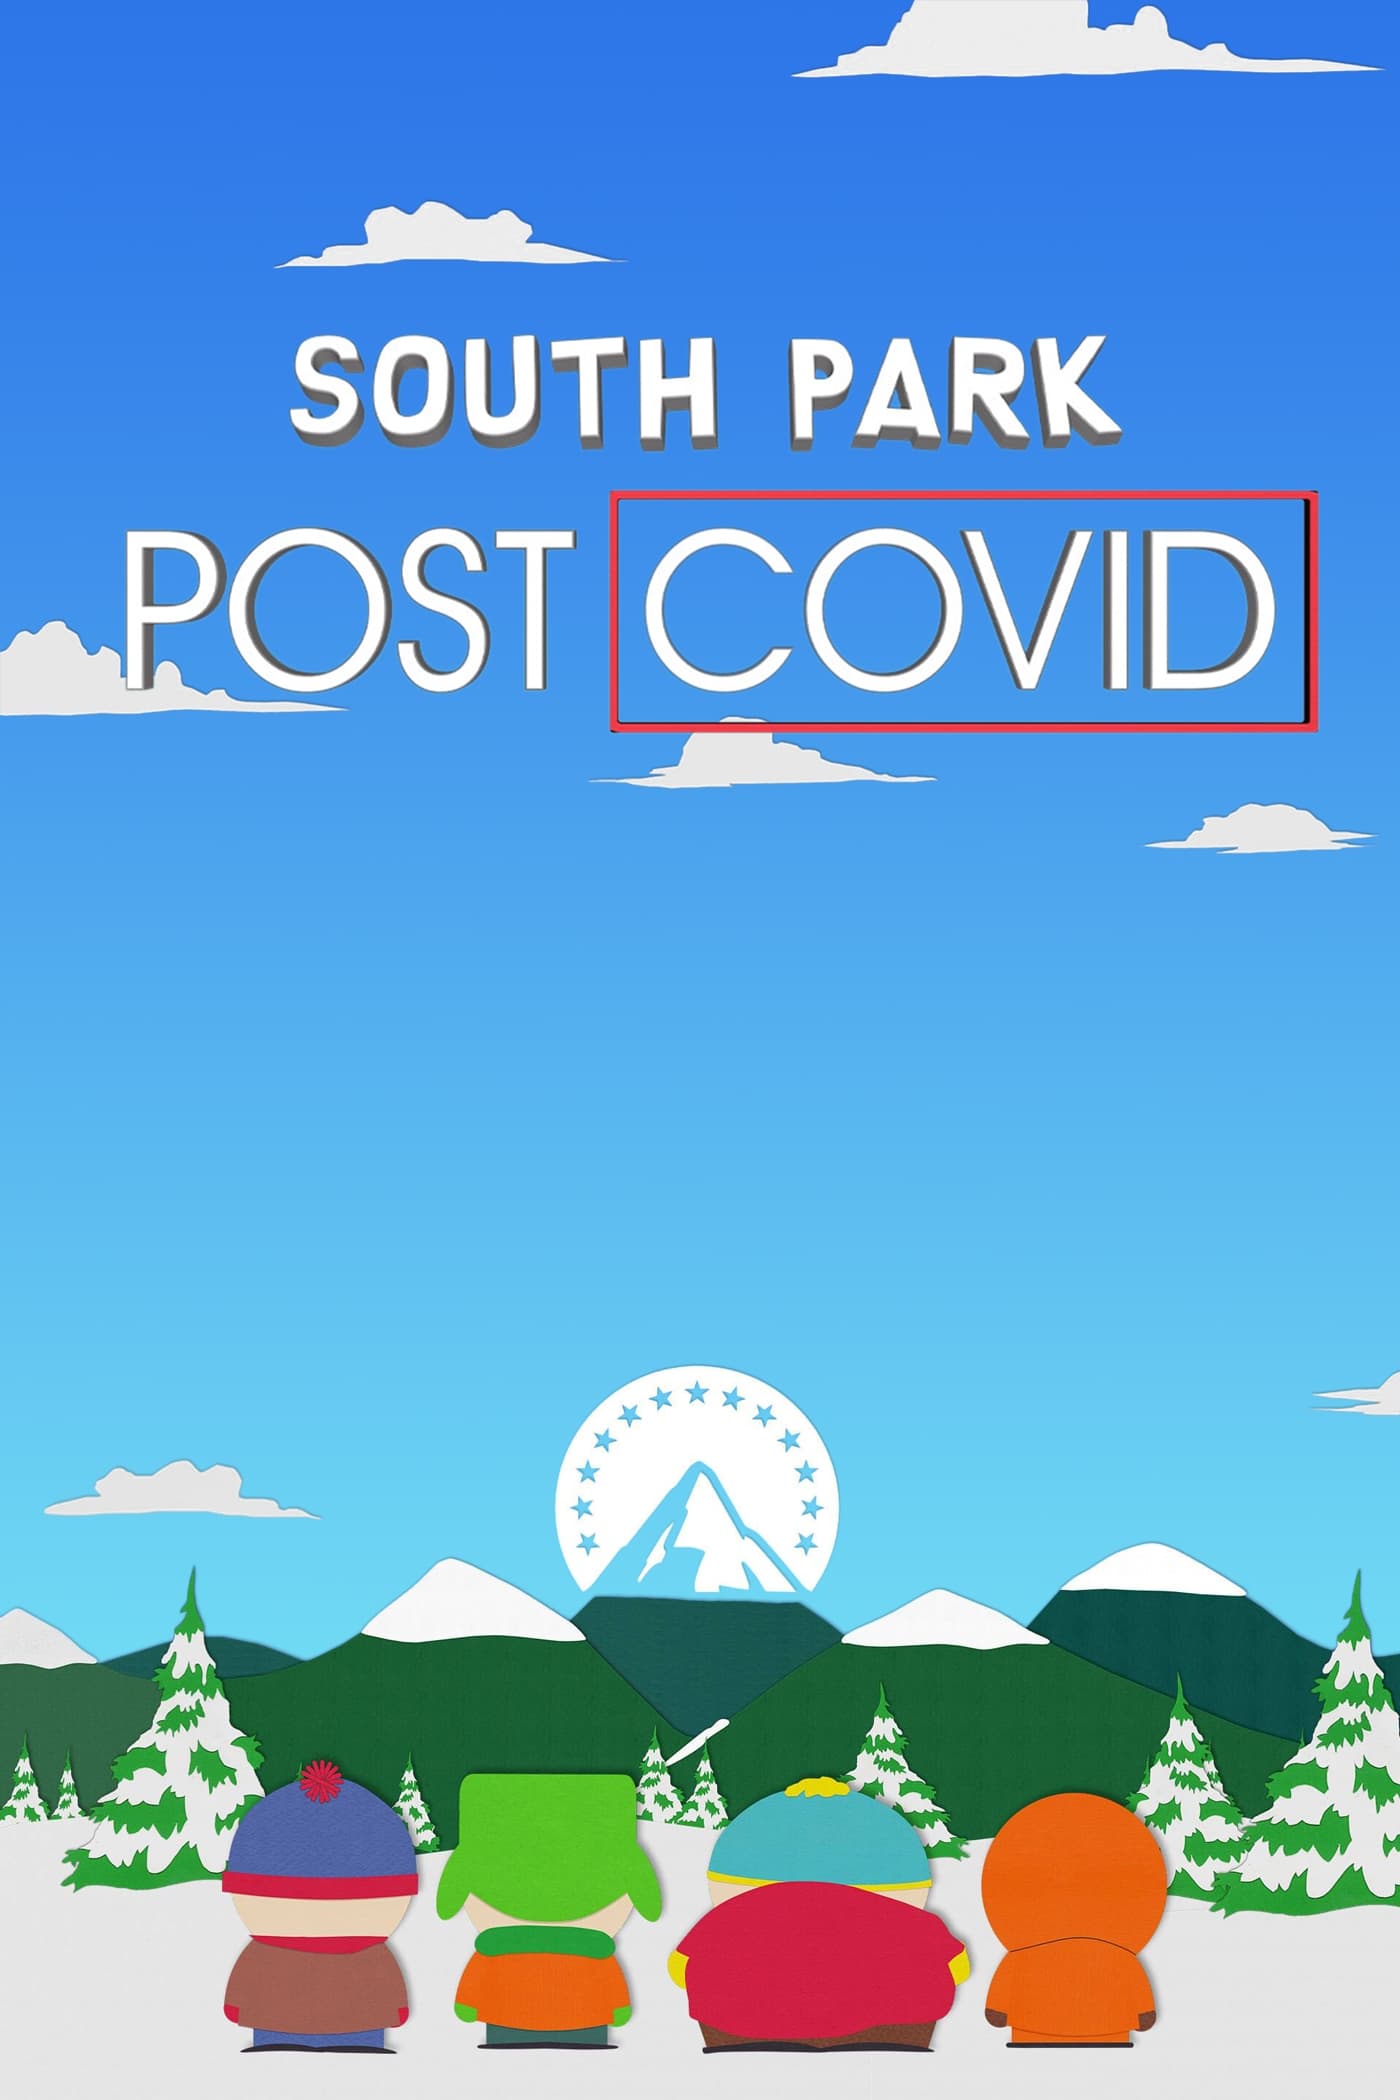 South Park : Post COVID